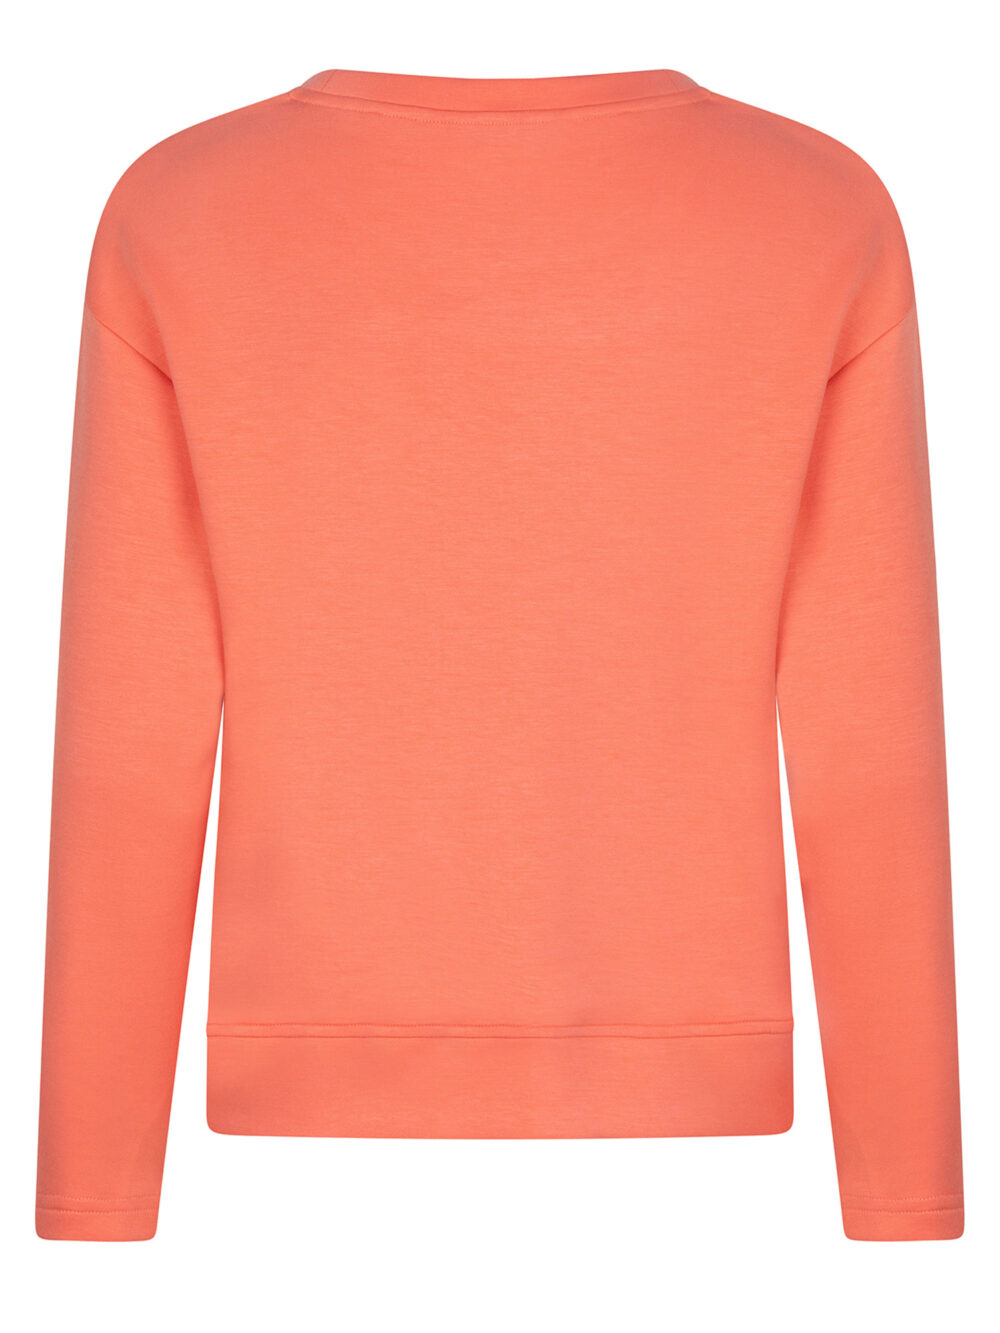 Sweater-Anouschka-peach-back